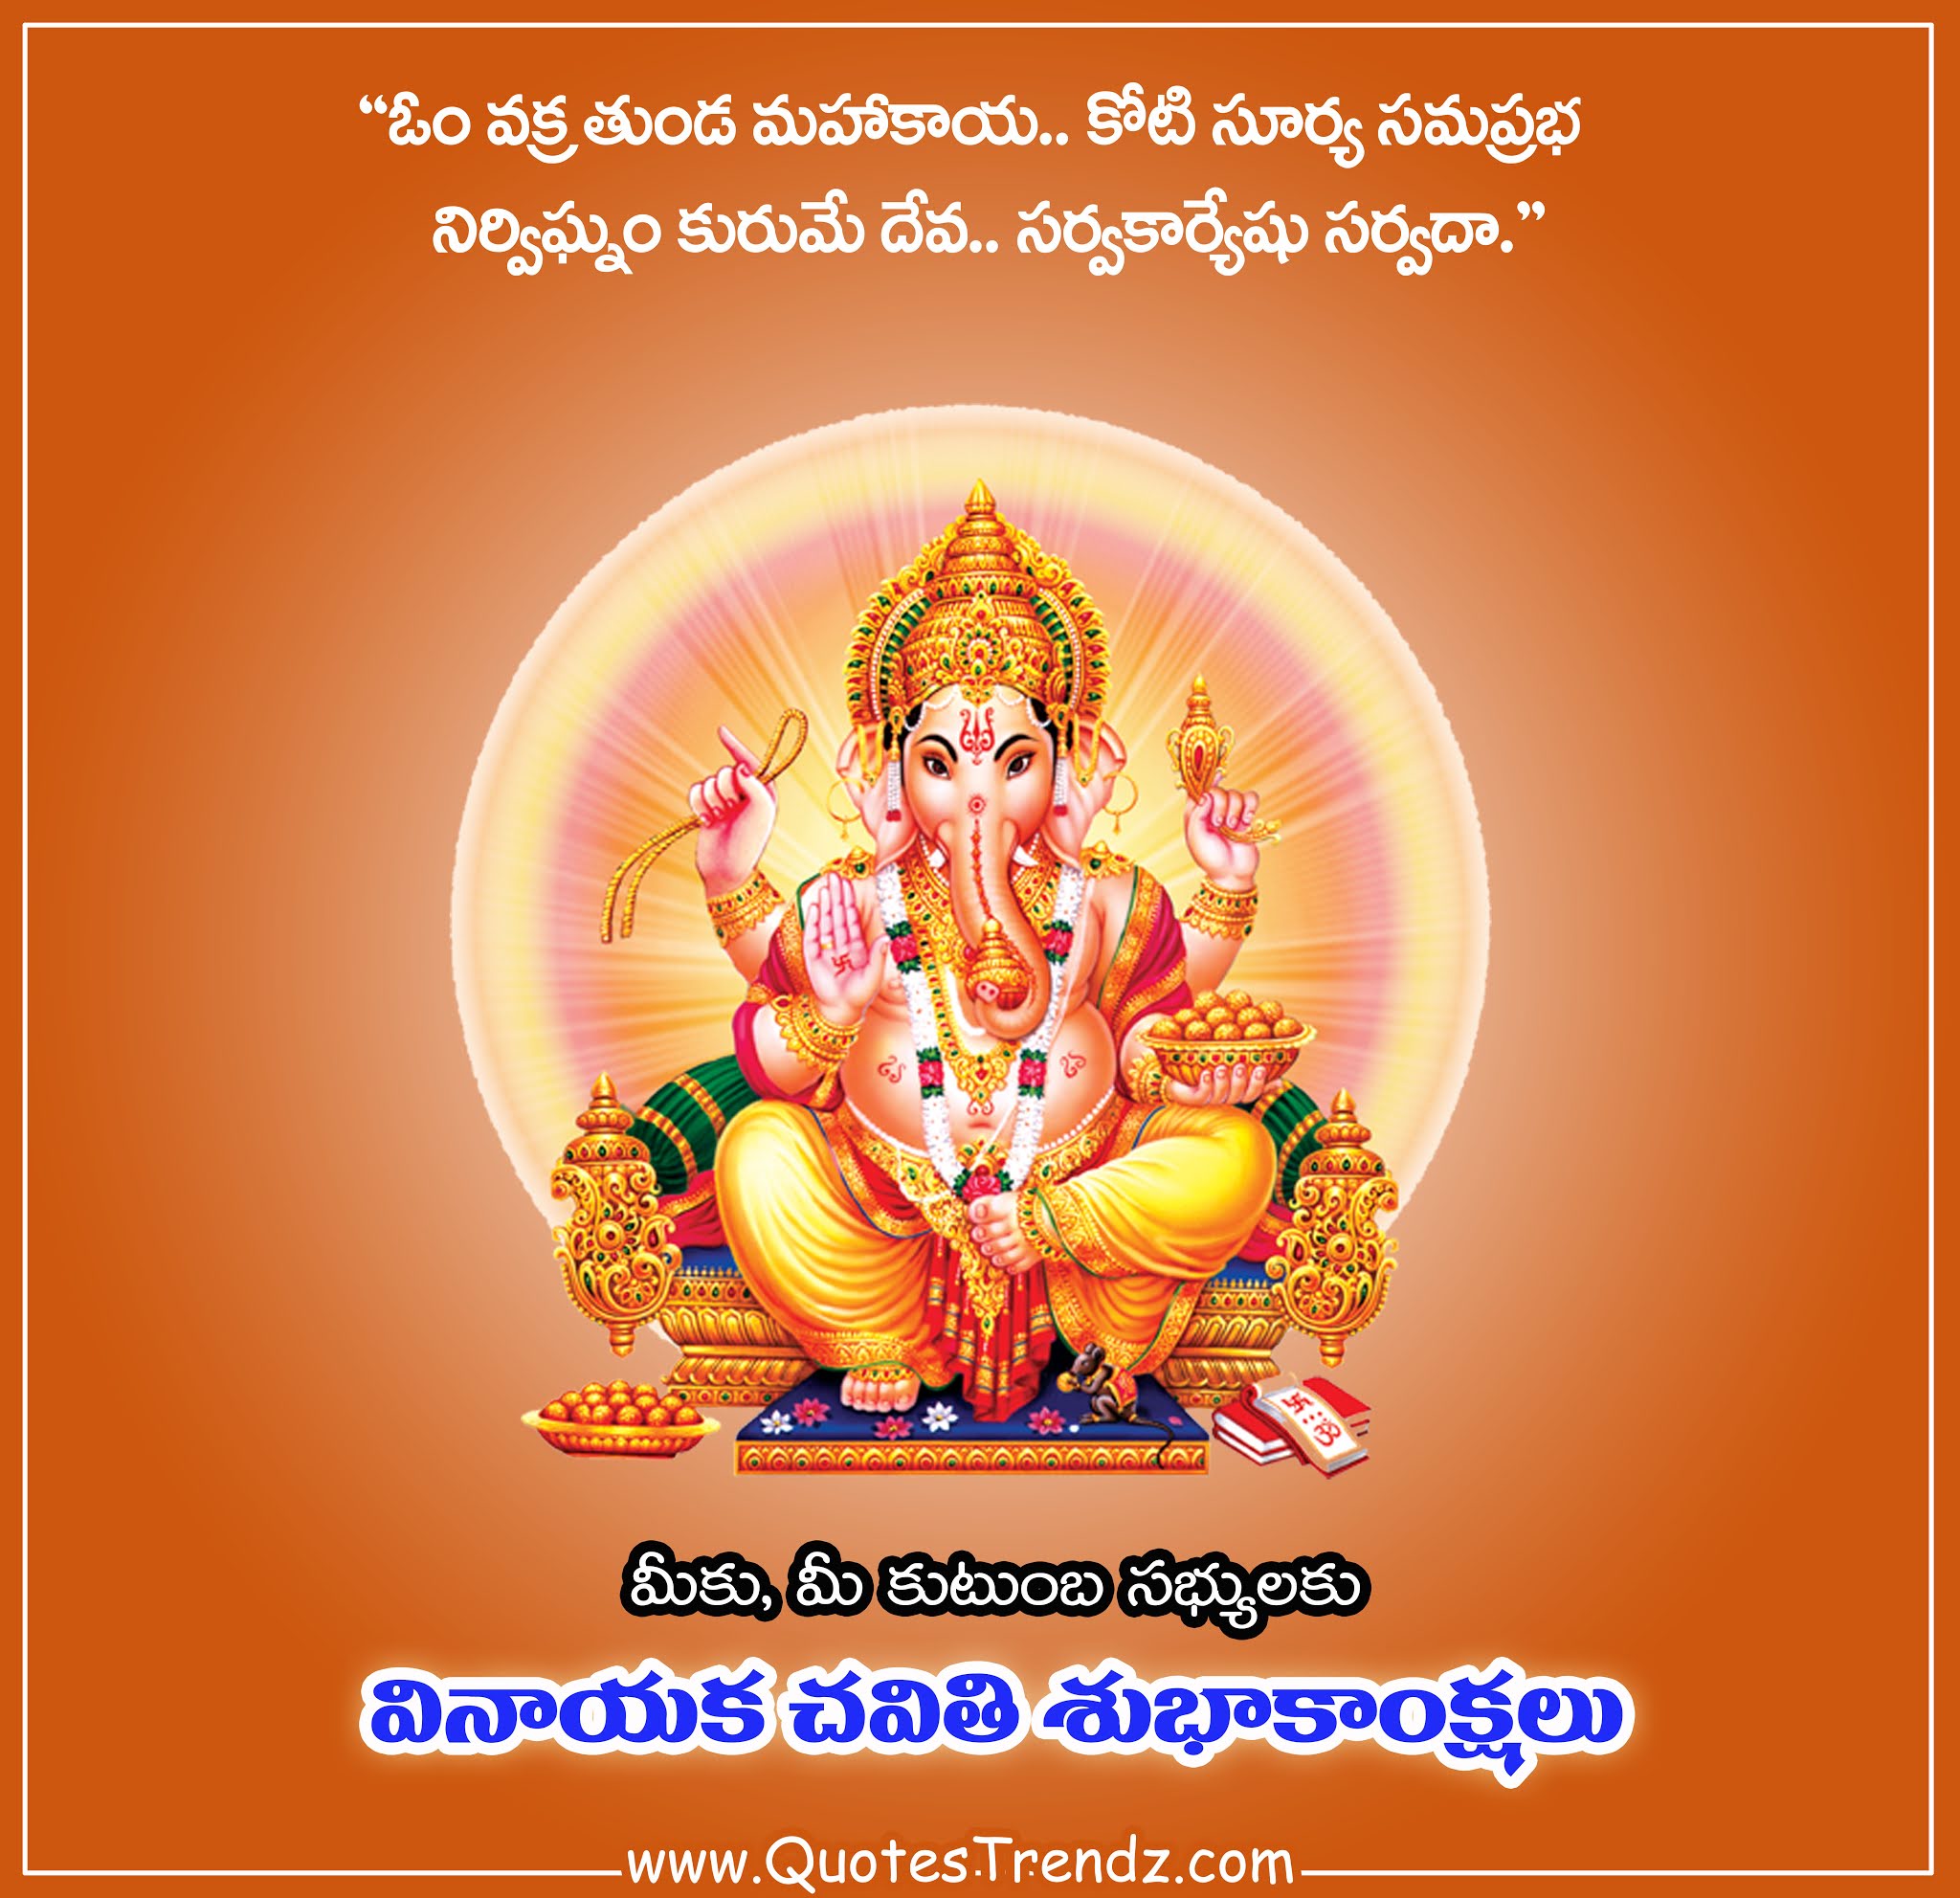 Happy Vinayaka Chavithi Telugu Wishes